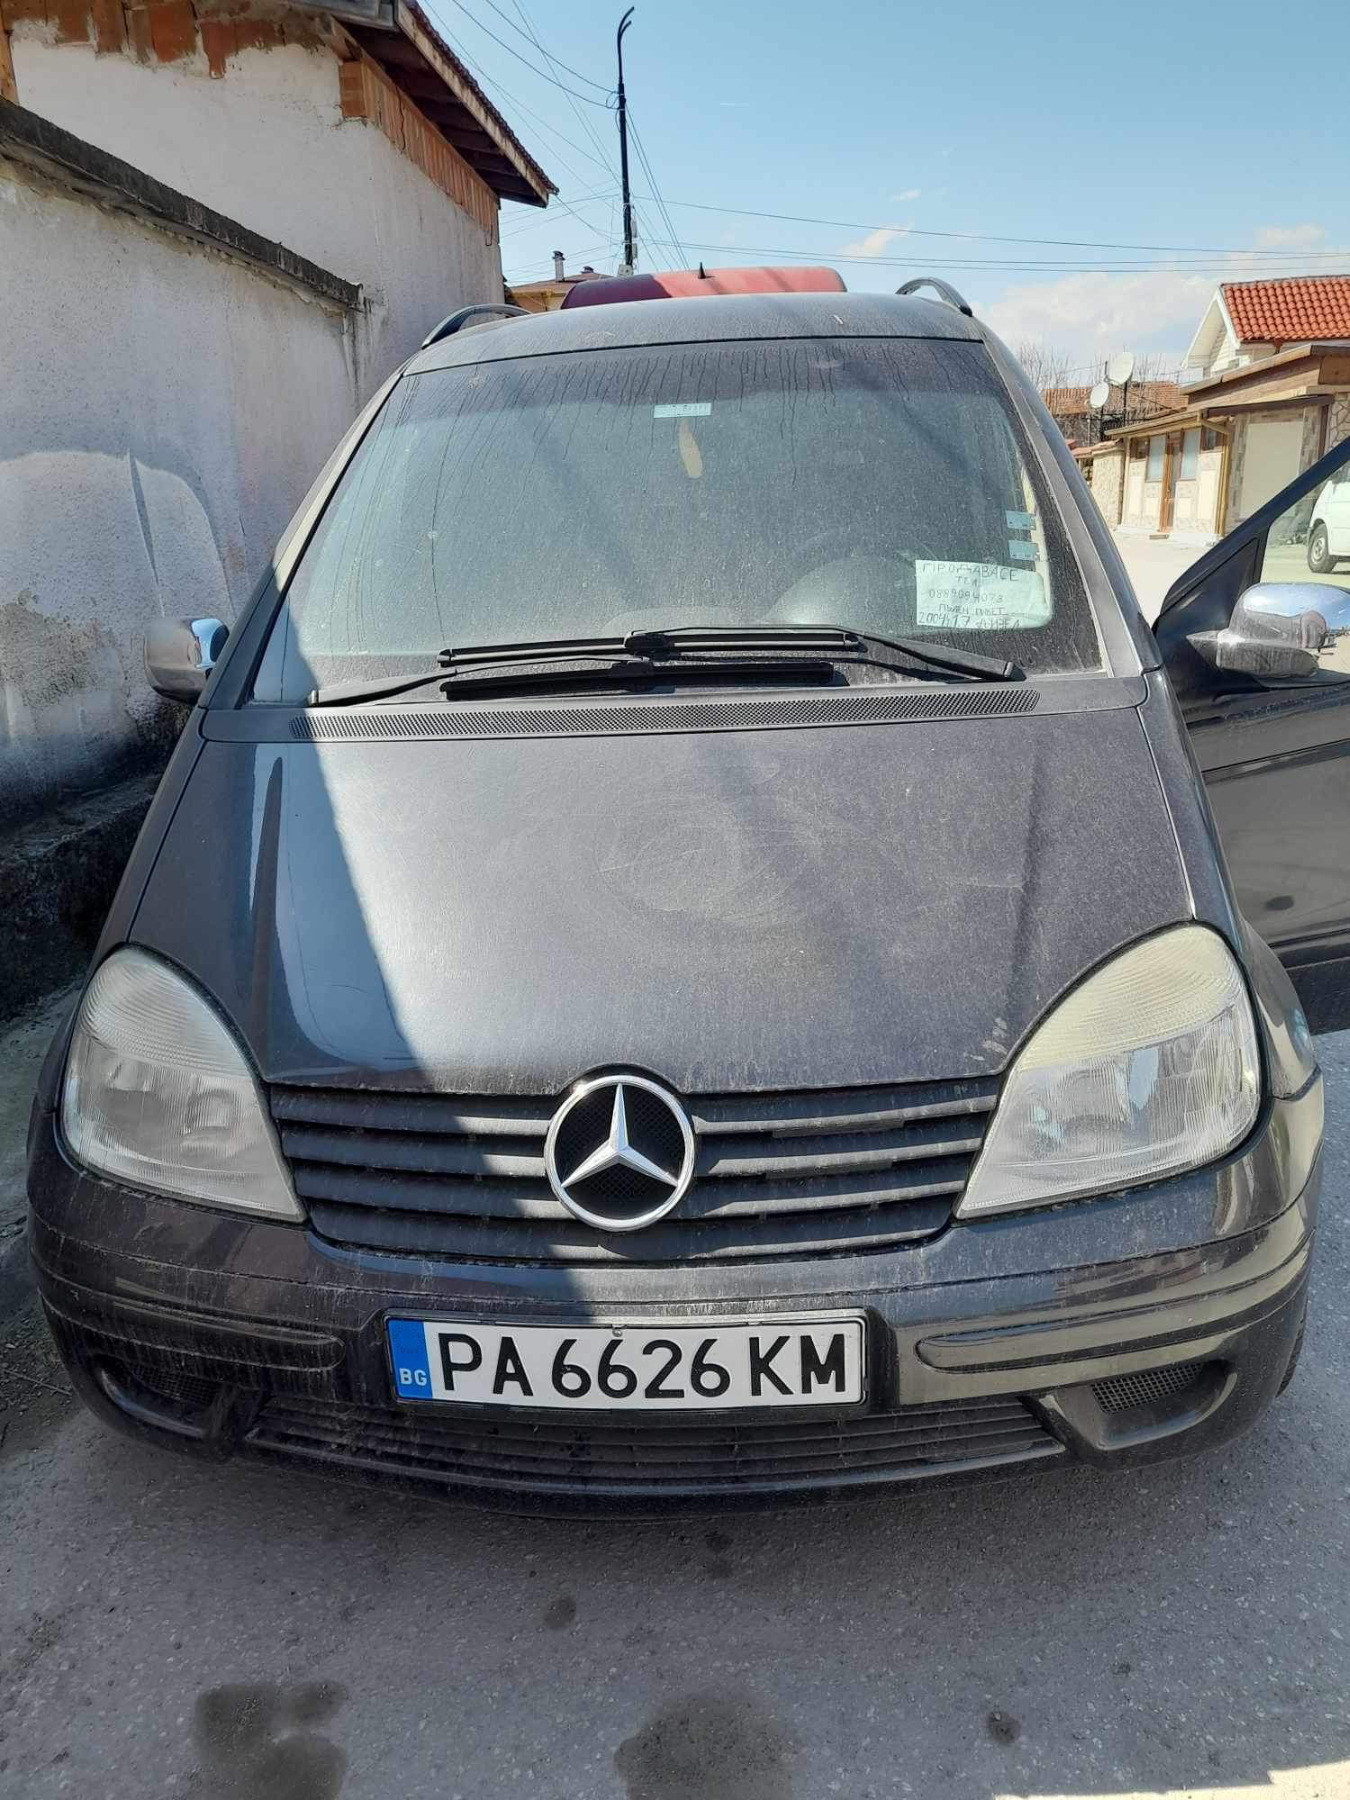 Mercedes-Benz Vaneo 1.7 diesel - изображение 1